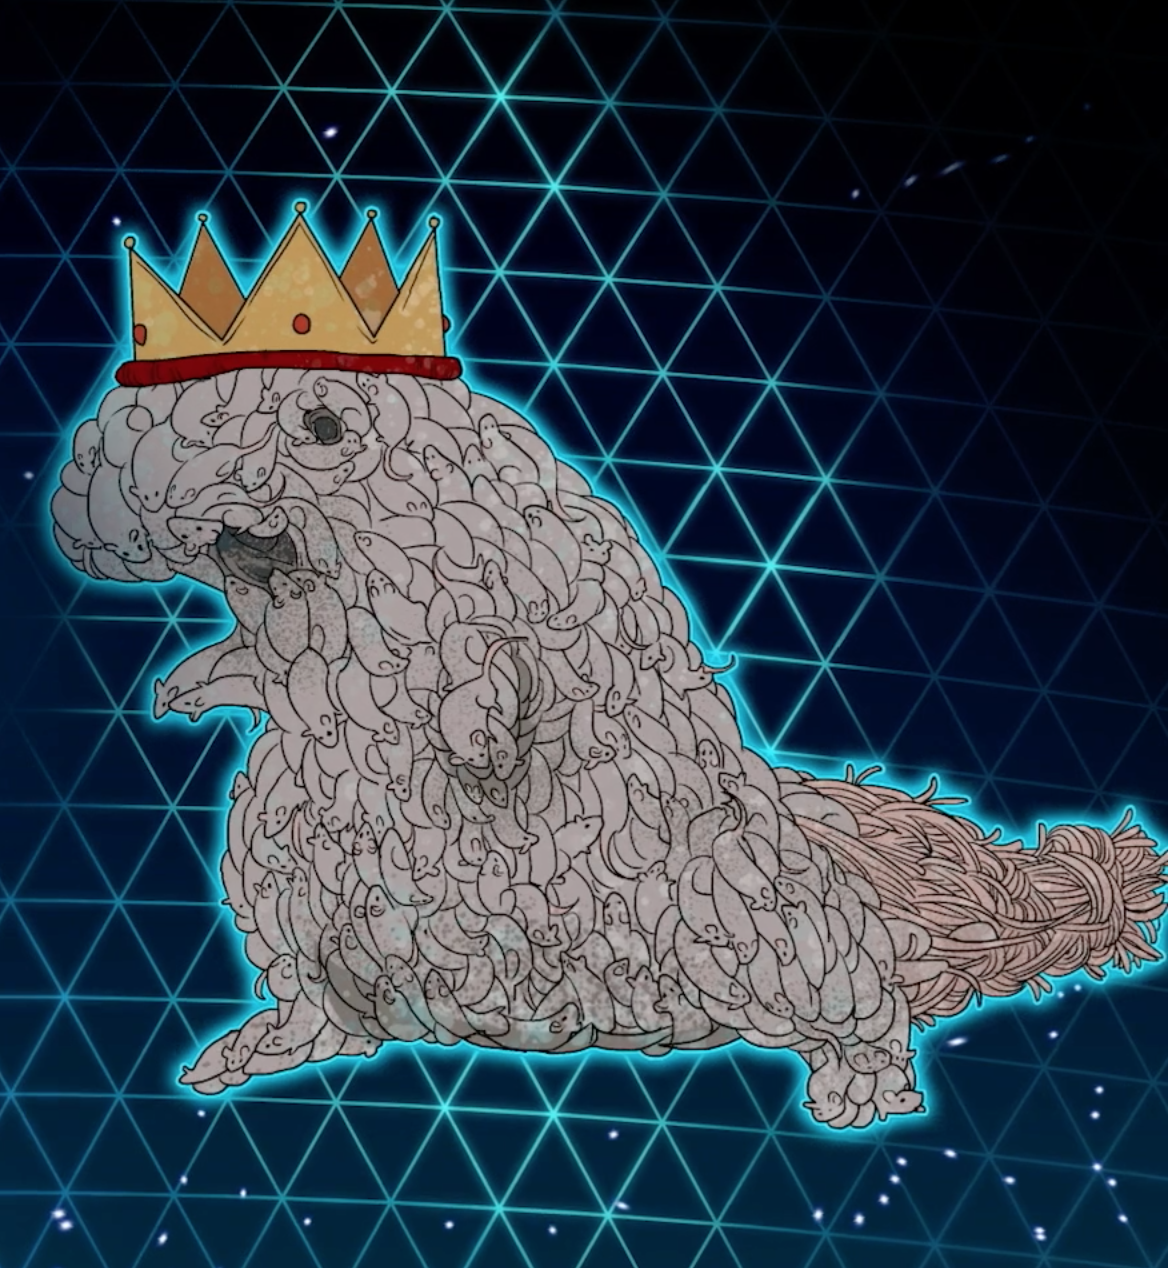 Rat King, Dimension 20 Wiki